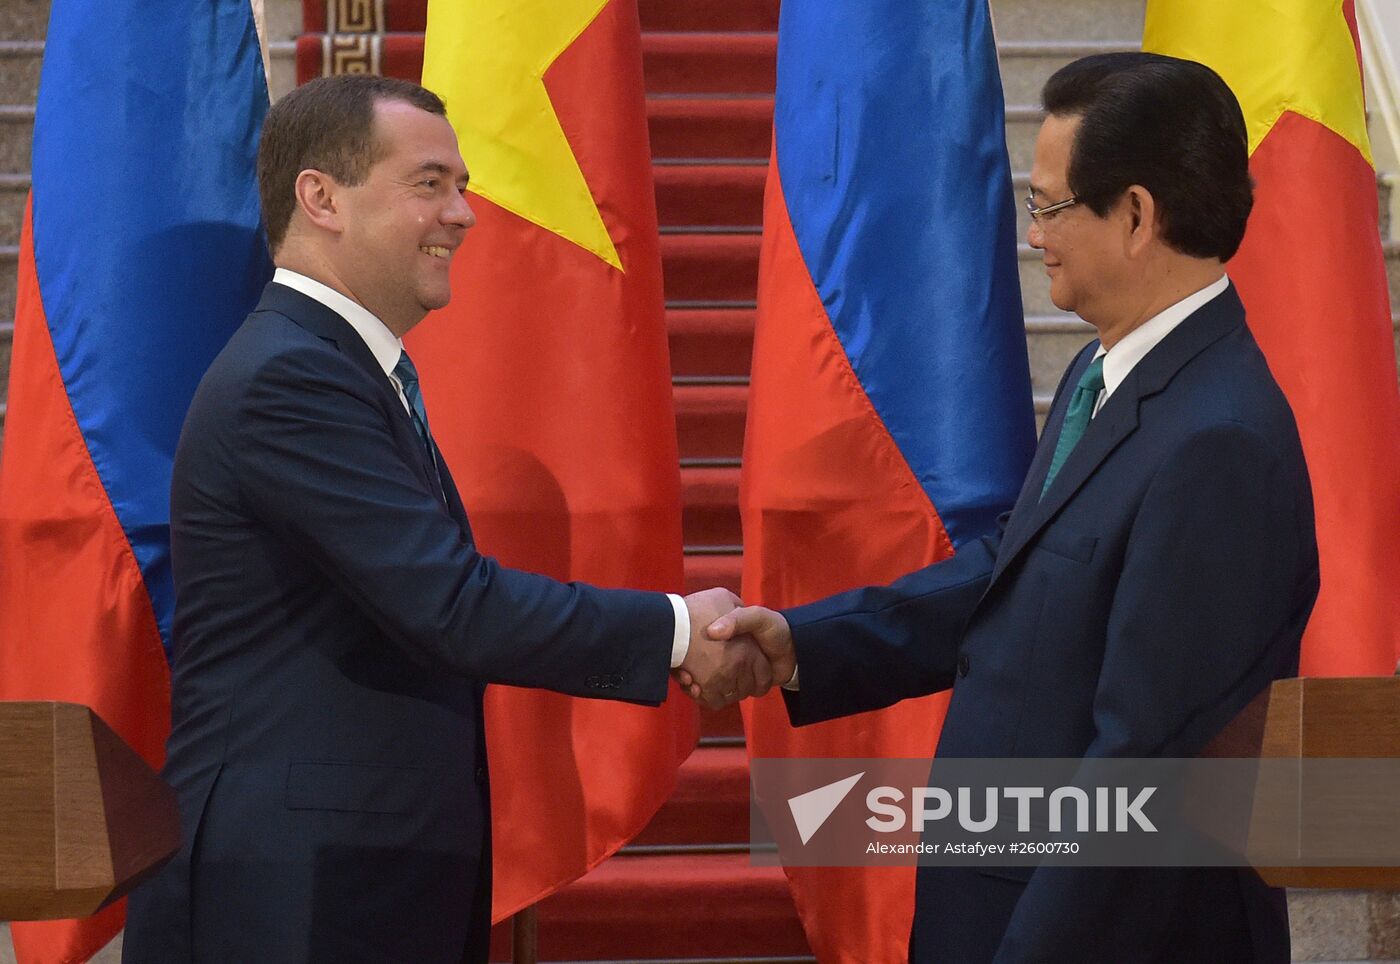 Prime Minister Dmitry Medvedev on official visit to Vietnam